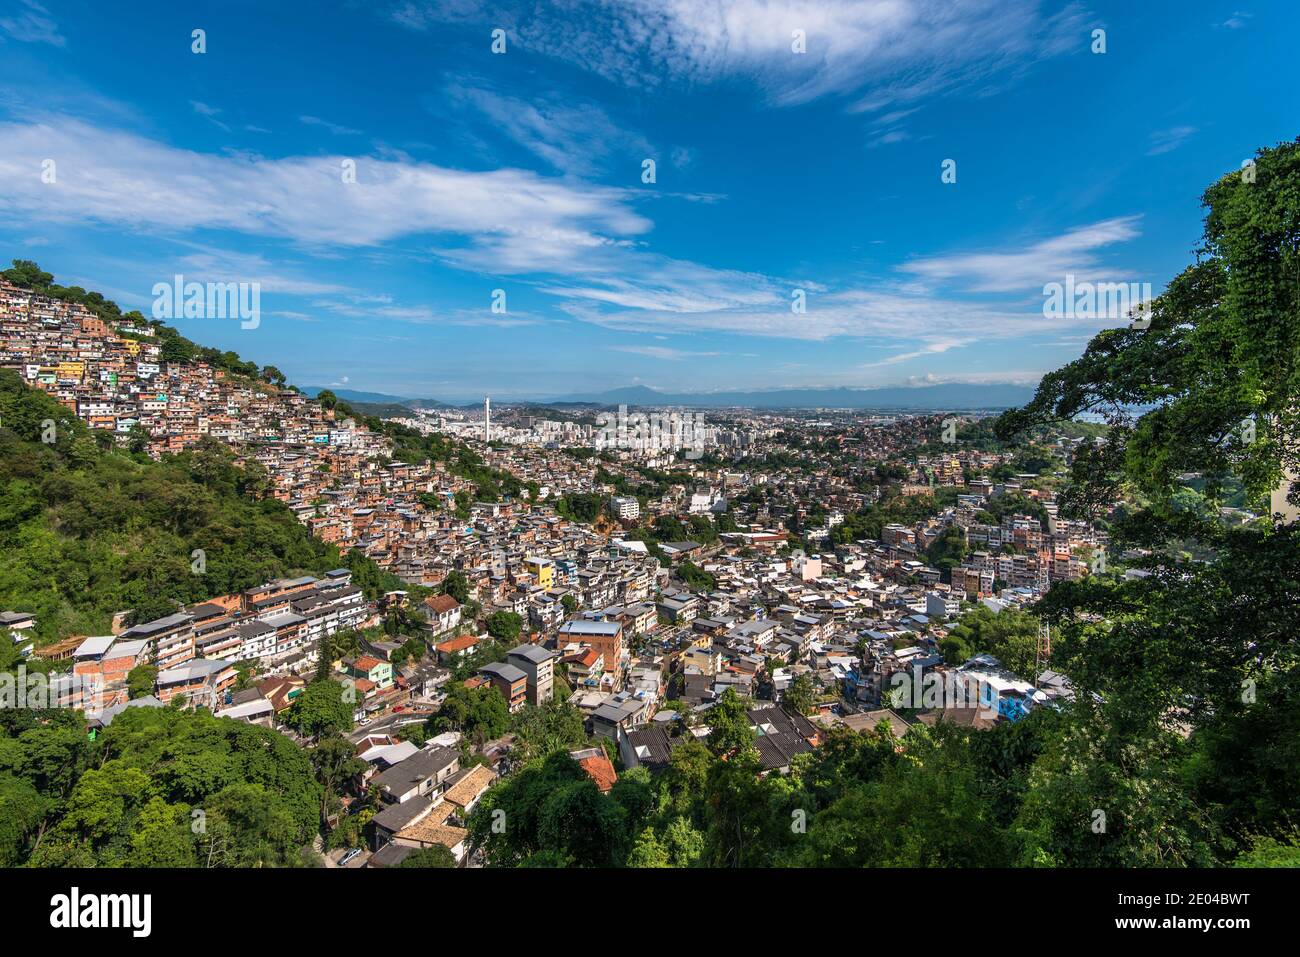 Aerial View of Rio de Janeiro Slums on the Hills Stock Photo